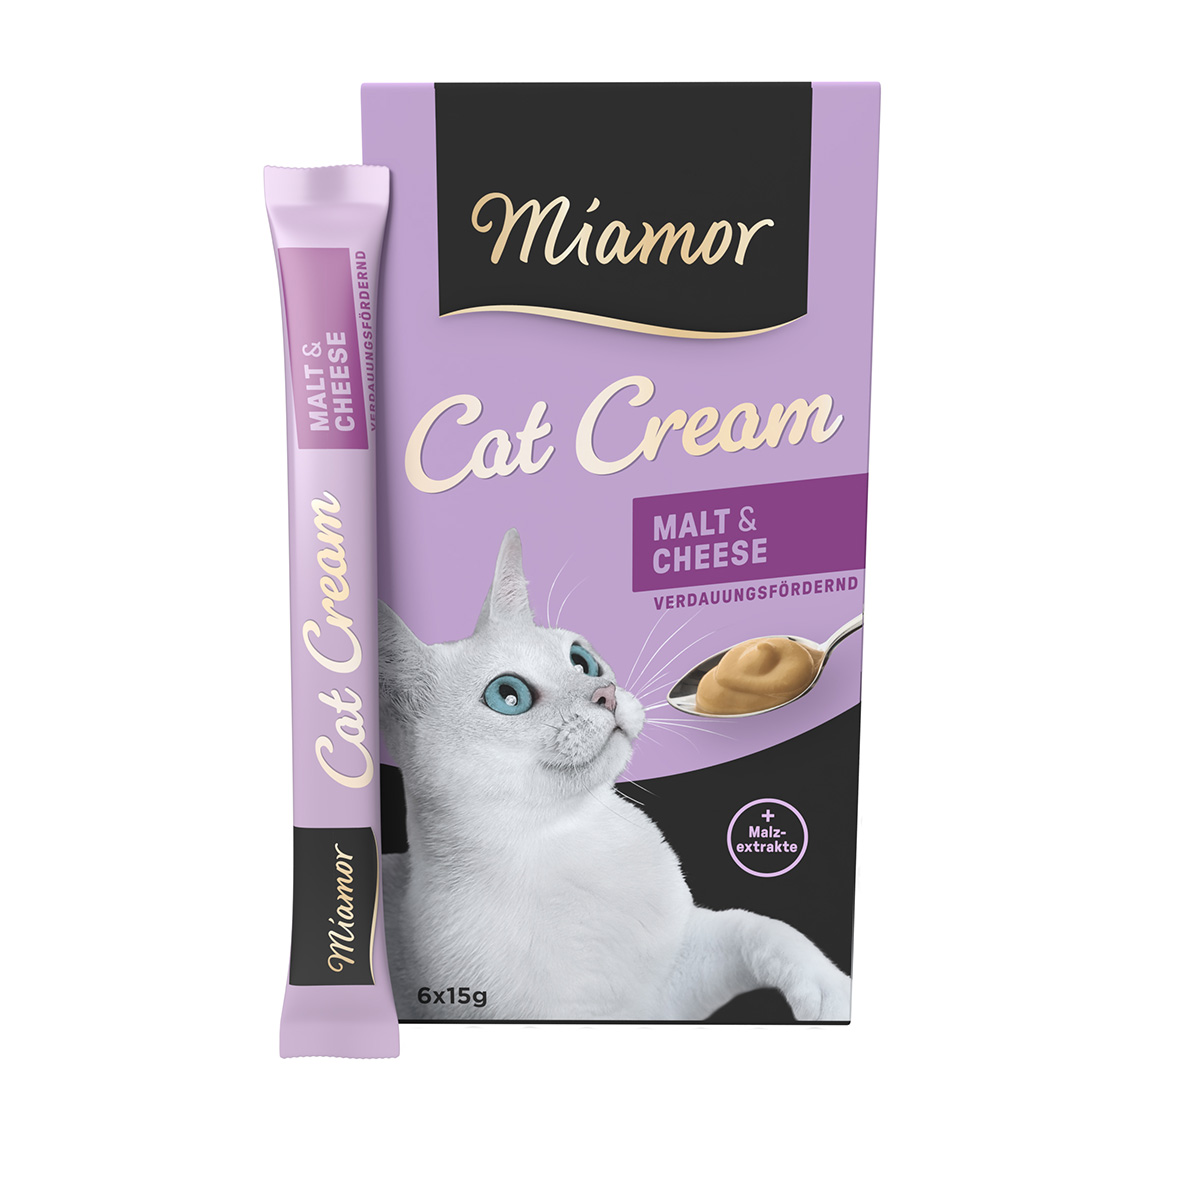 Miamor Cat Cream Malt & Cheese 6x15g